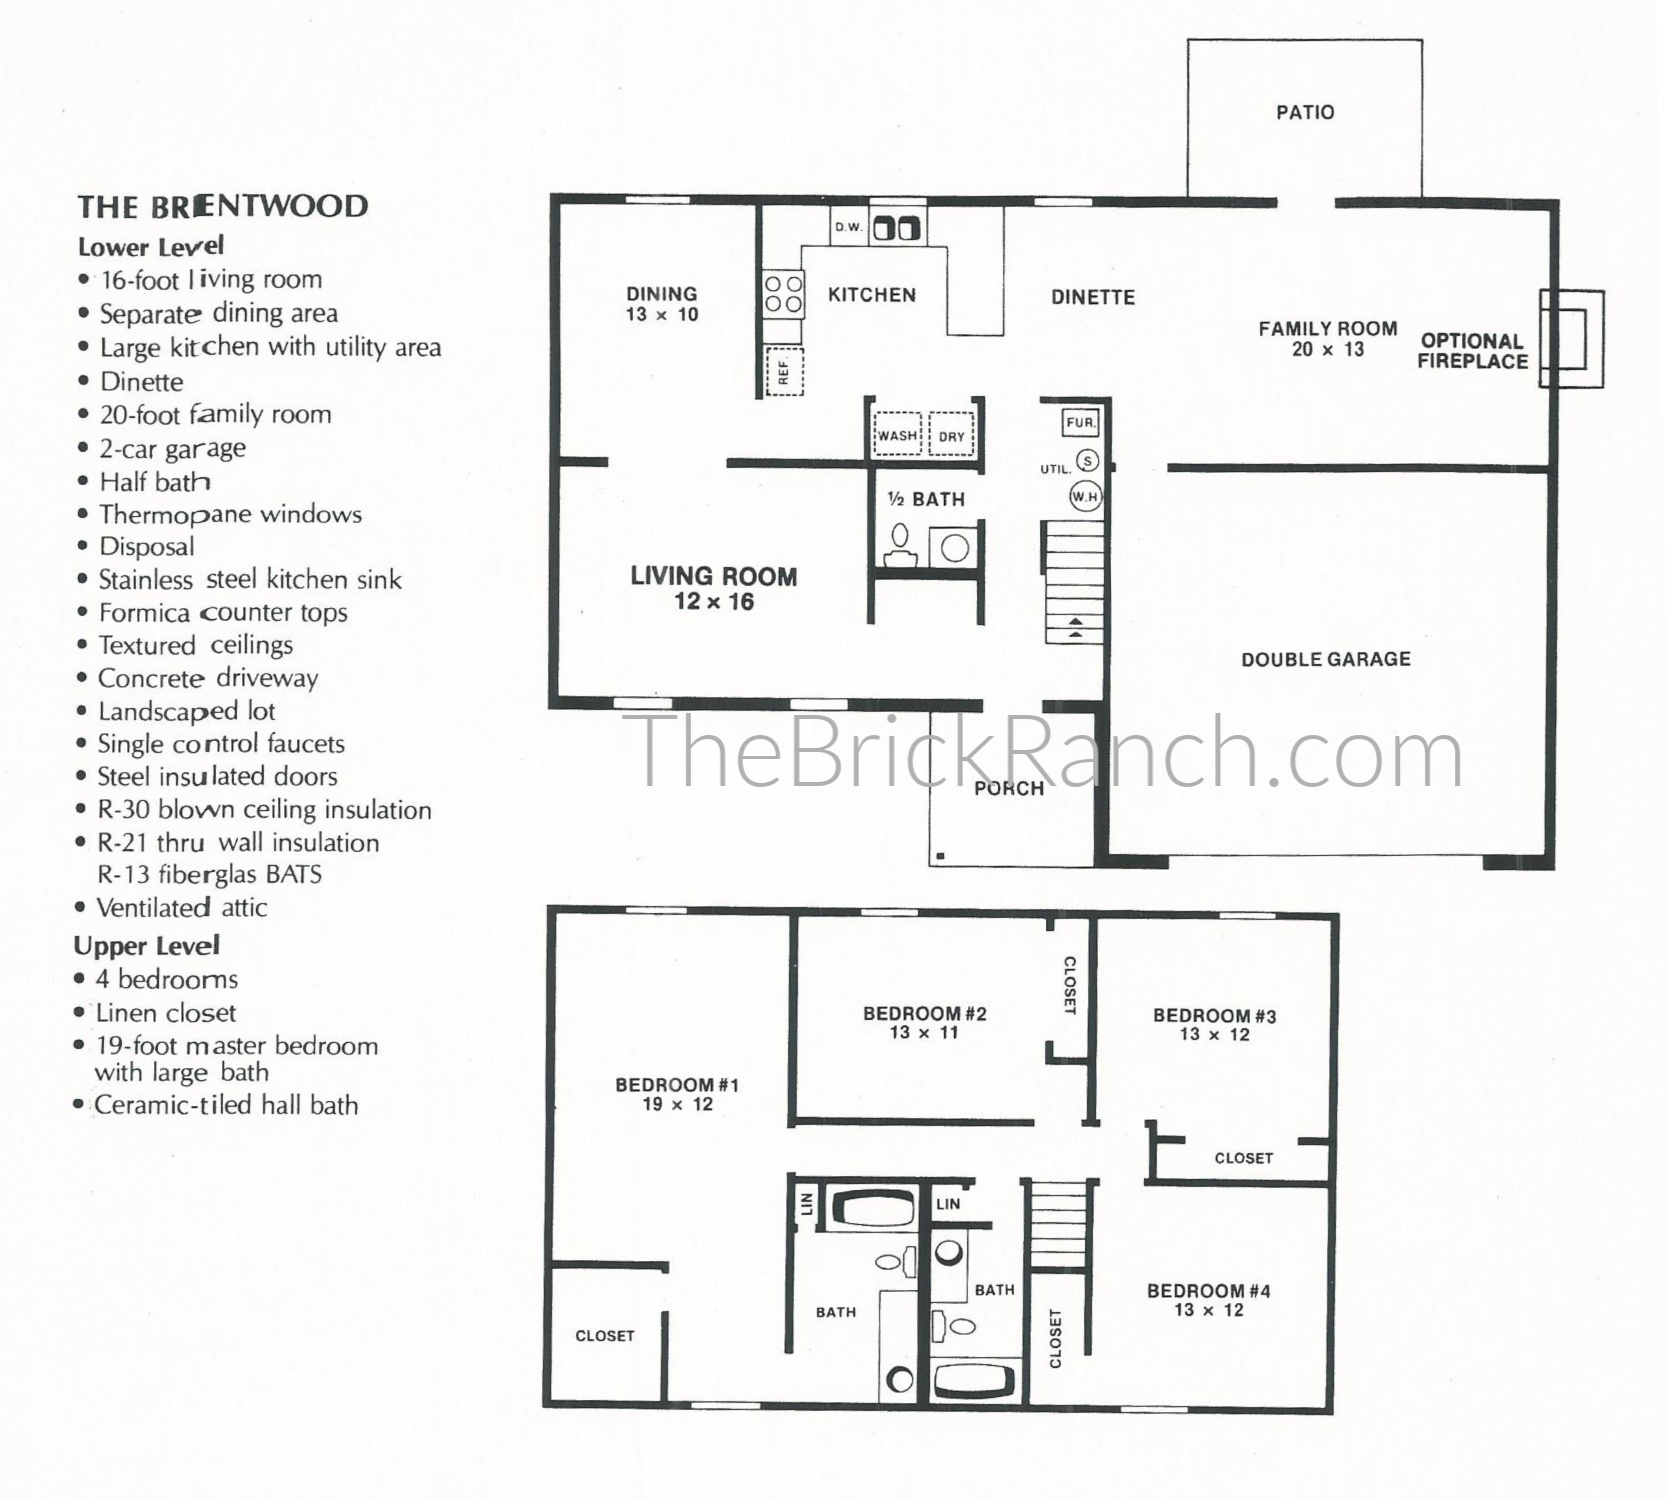 Huber Homes Brentwood floor plan